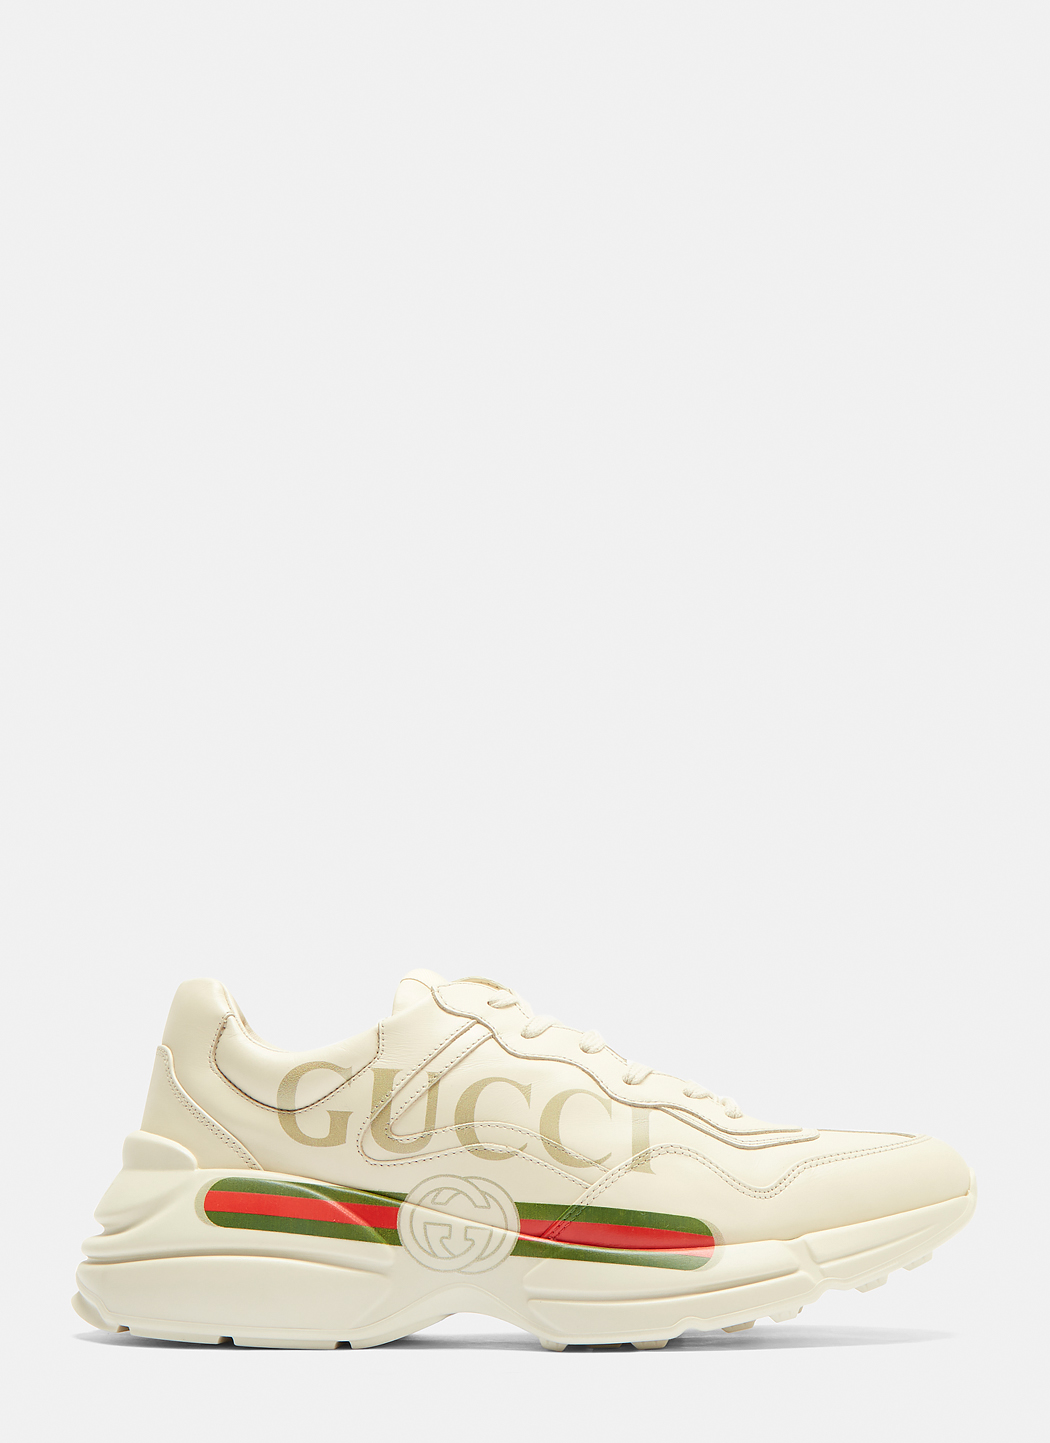 Gucci Rhyton Gucci Logo Leather Sneakers In White Ln Cc